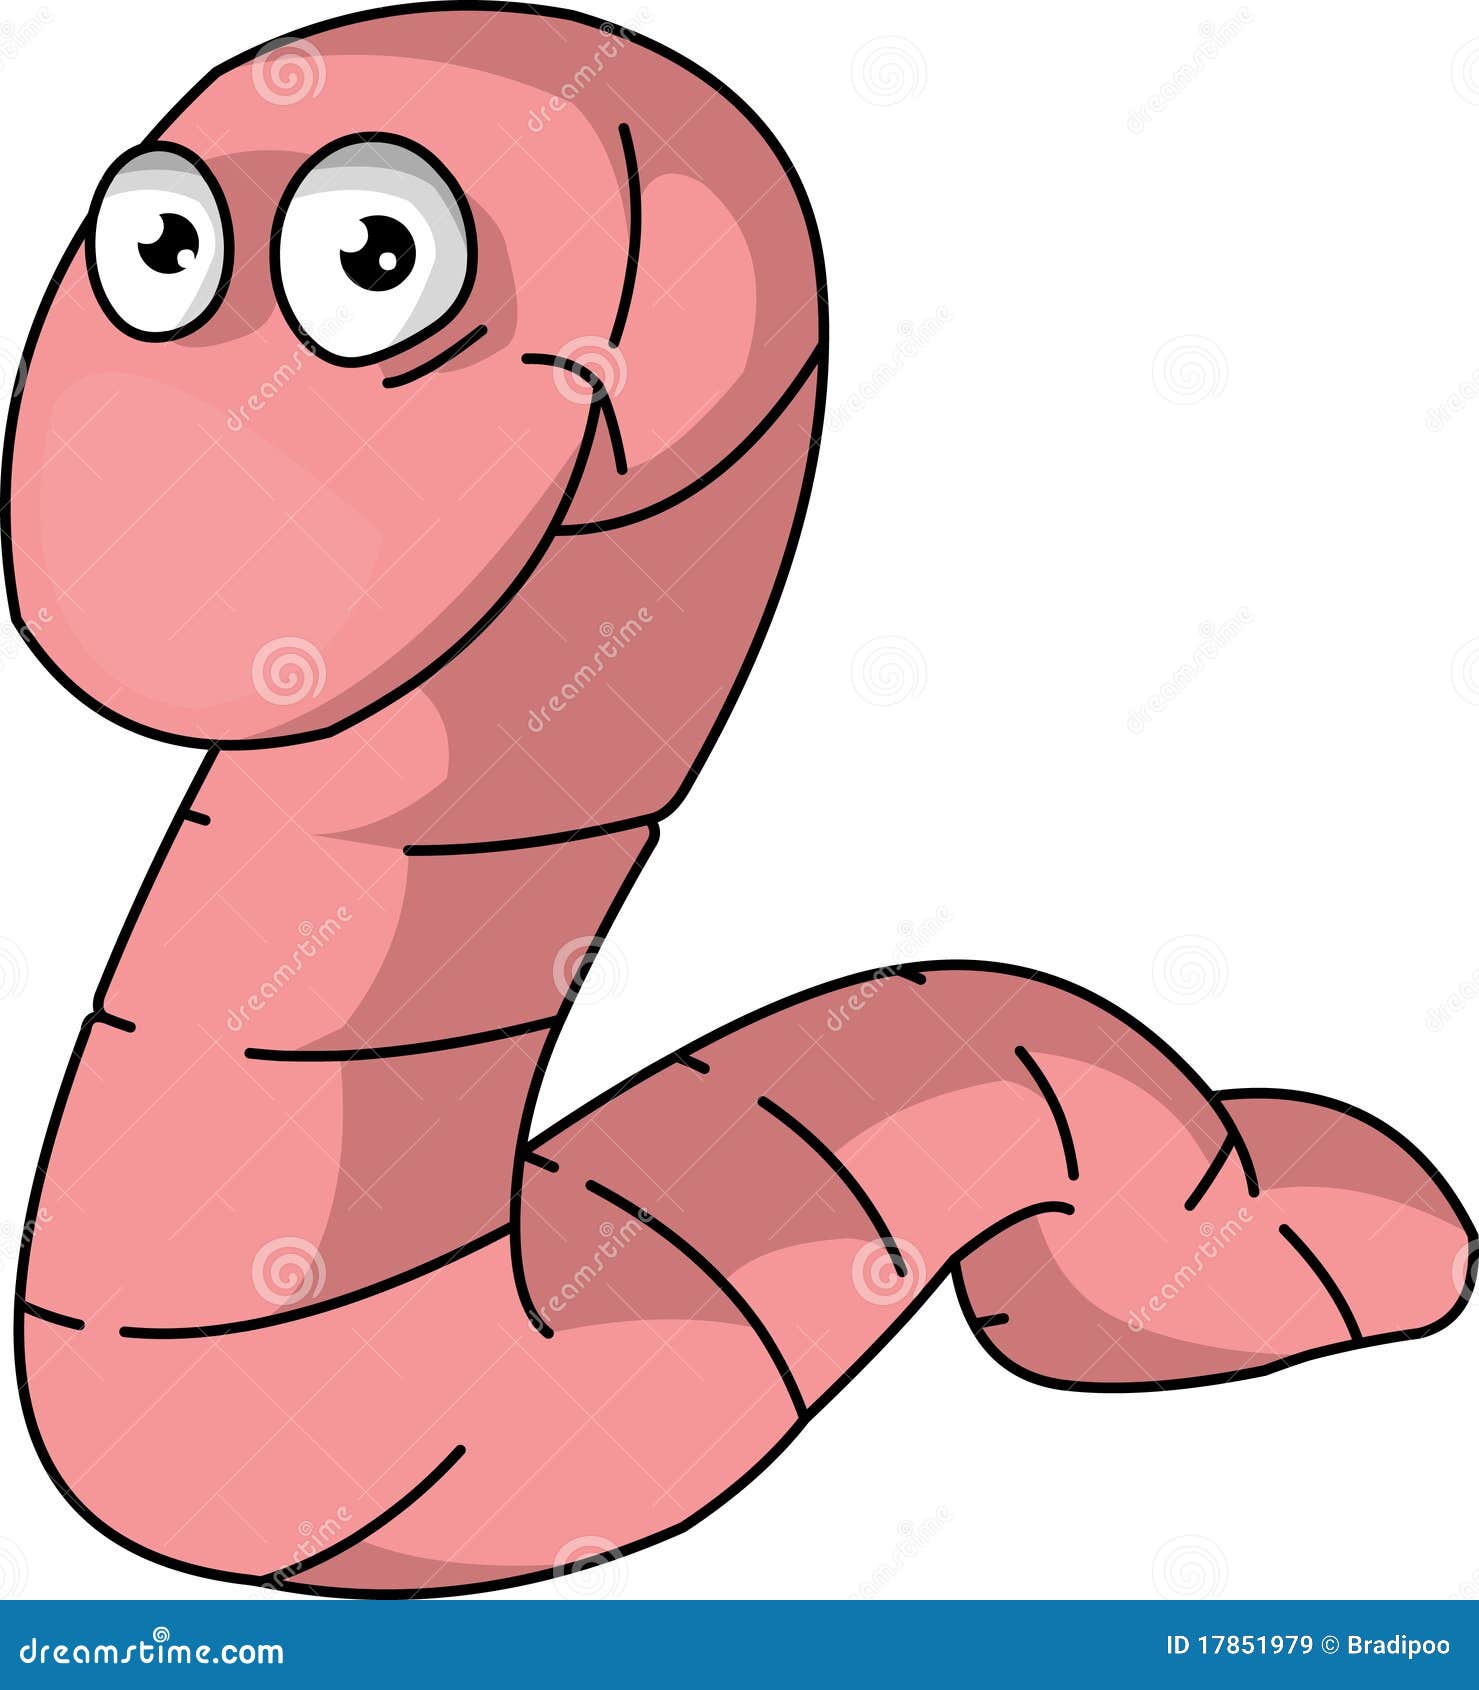 clipart worms cartoon - photo #44